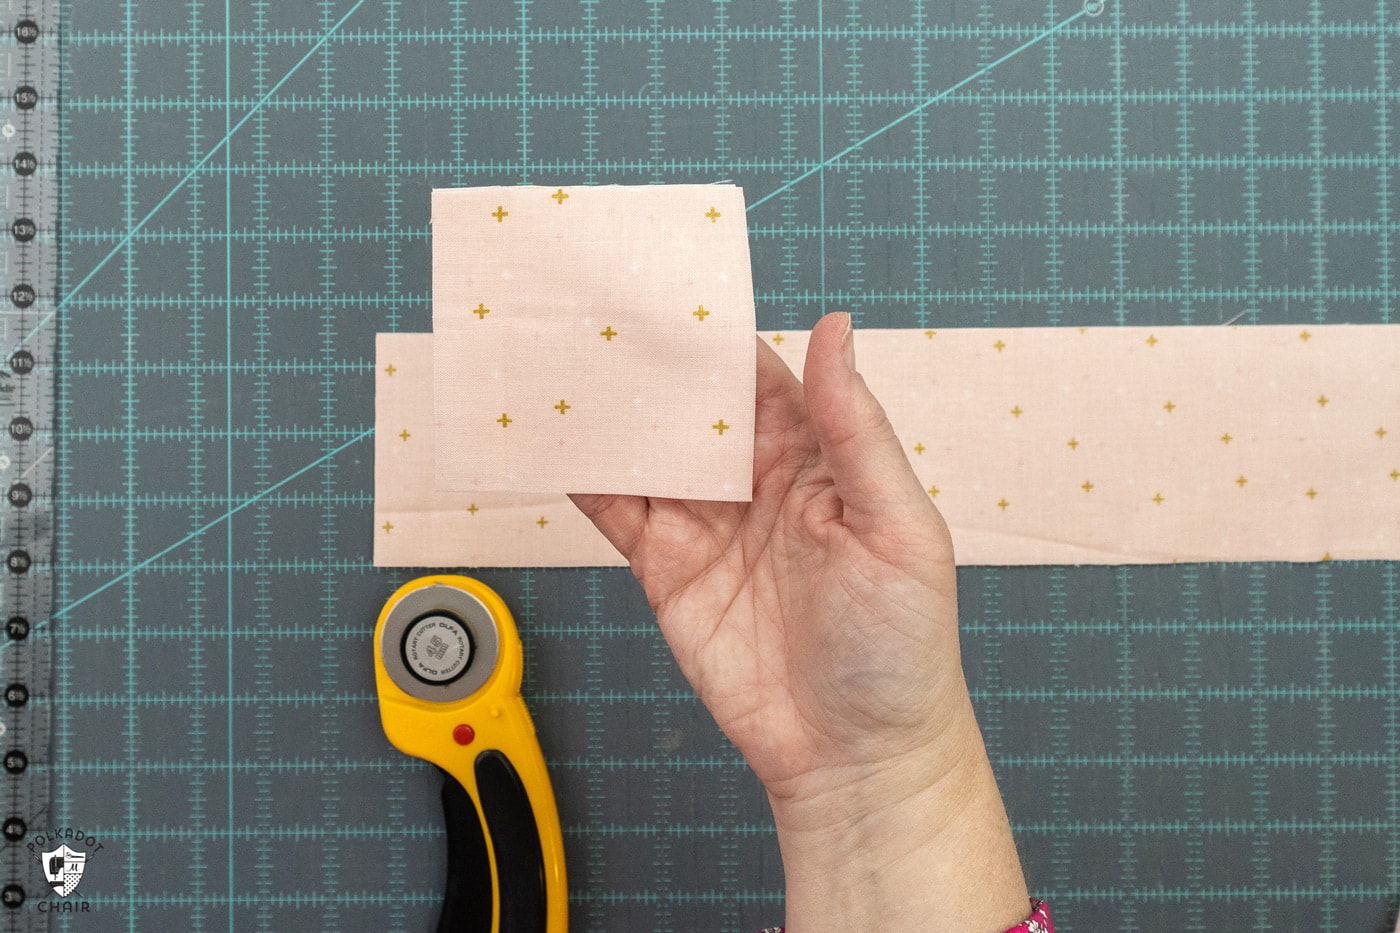 pink fabric being cut on blue cutting mat